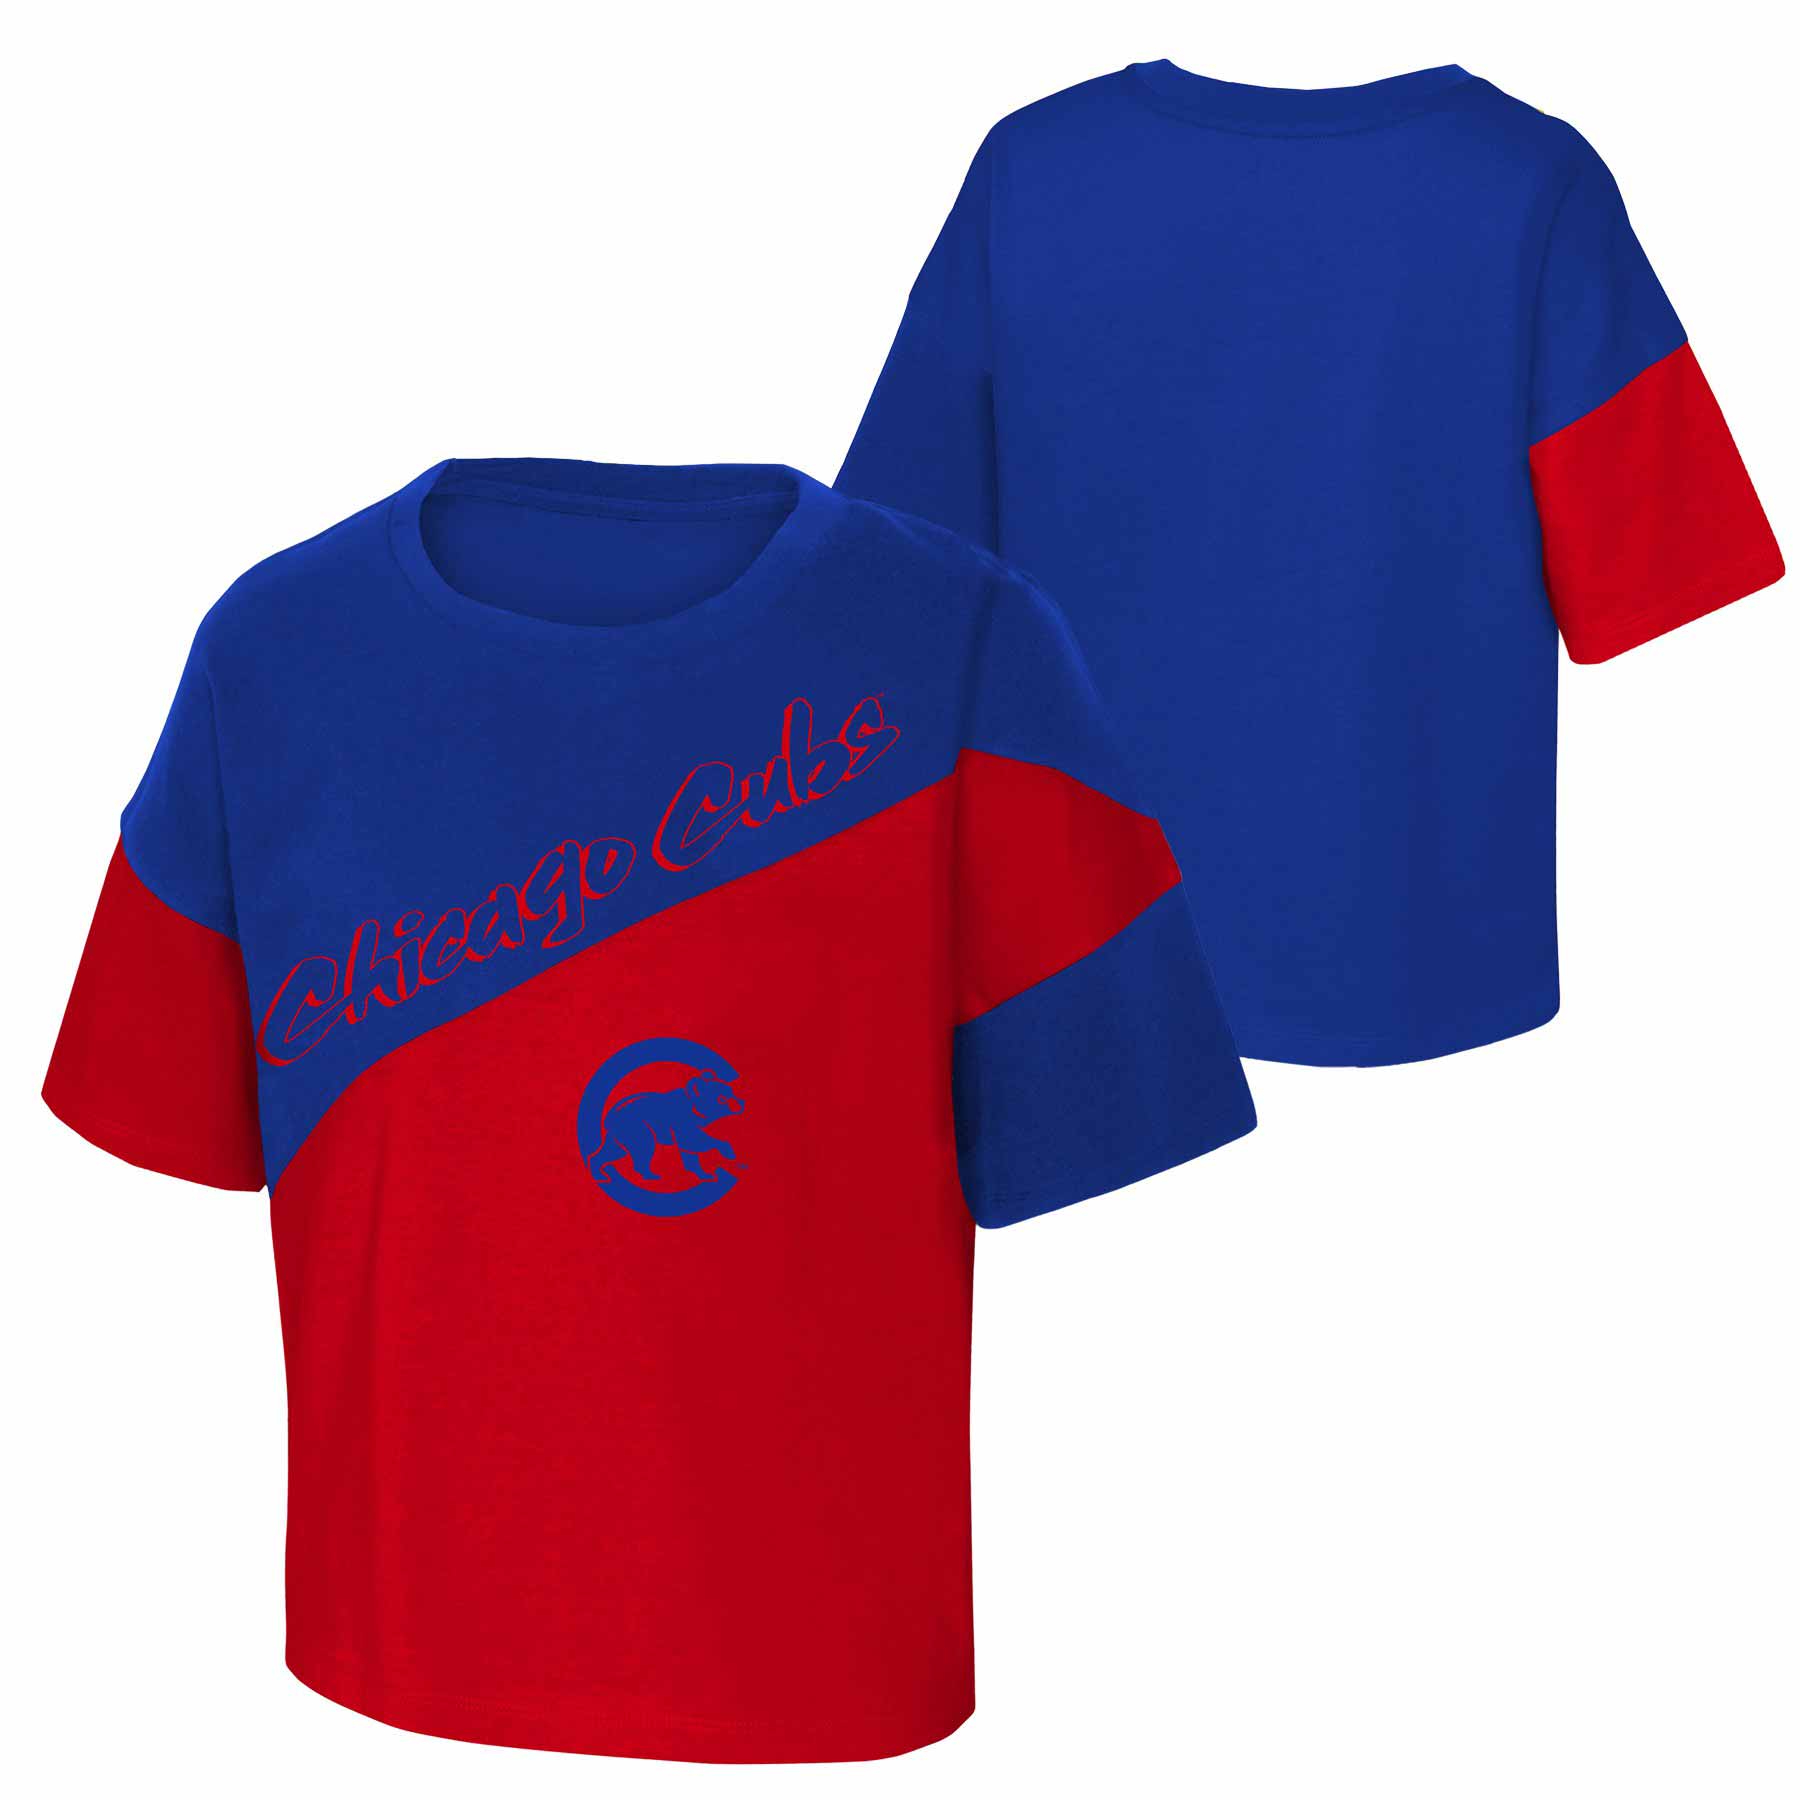 Outerstuff Chicago Cubs Youth Girls Power Up T-Shirt Medium = 8/10